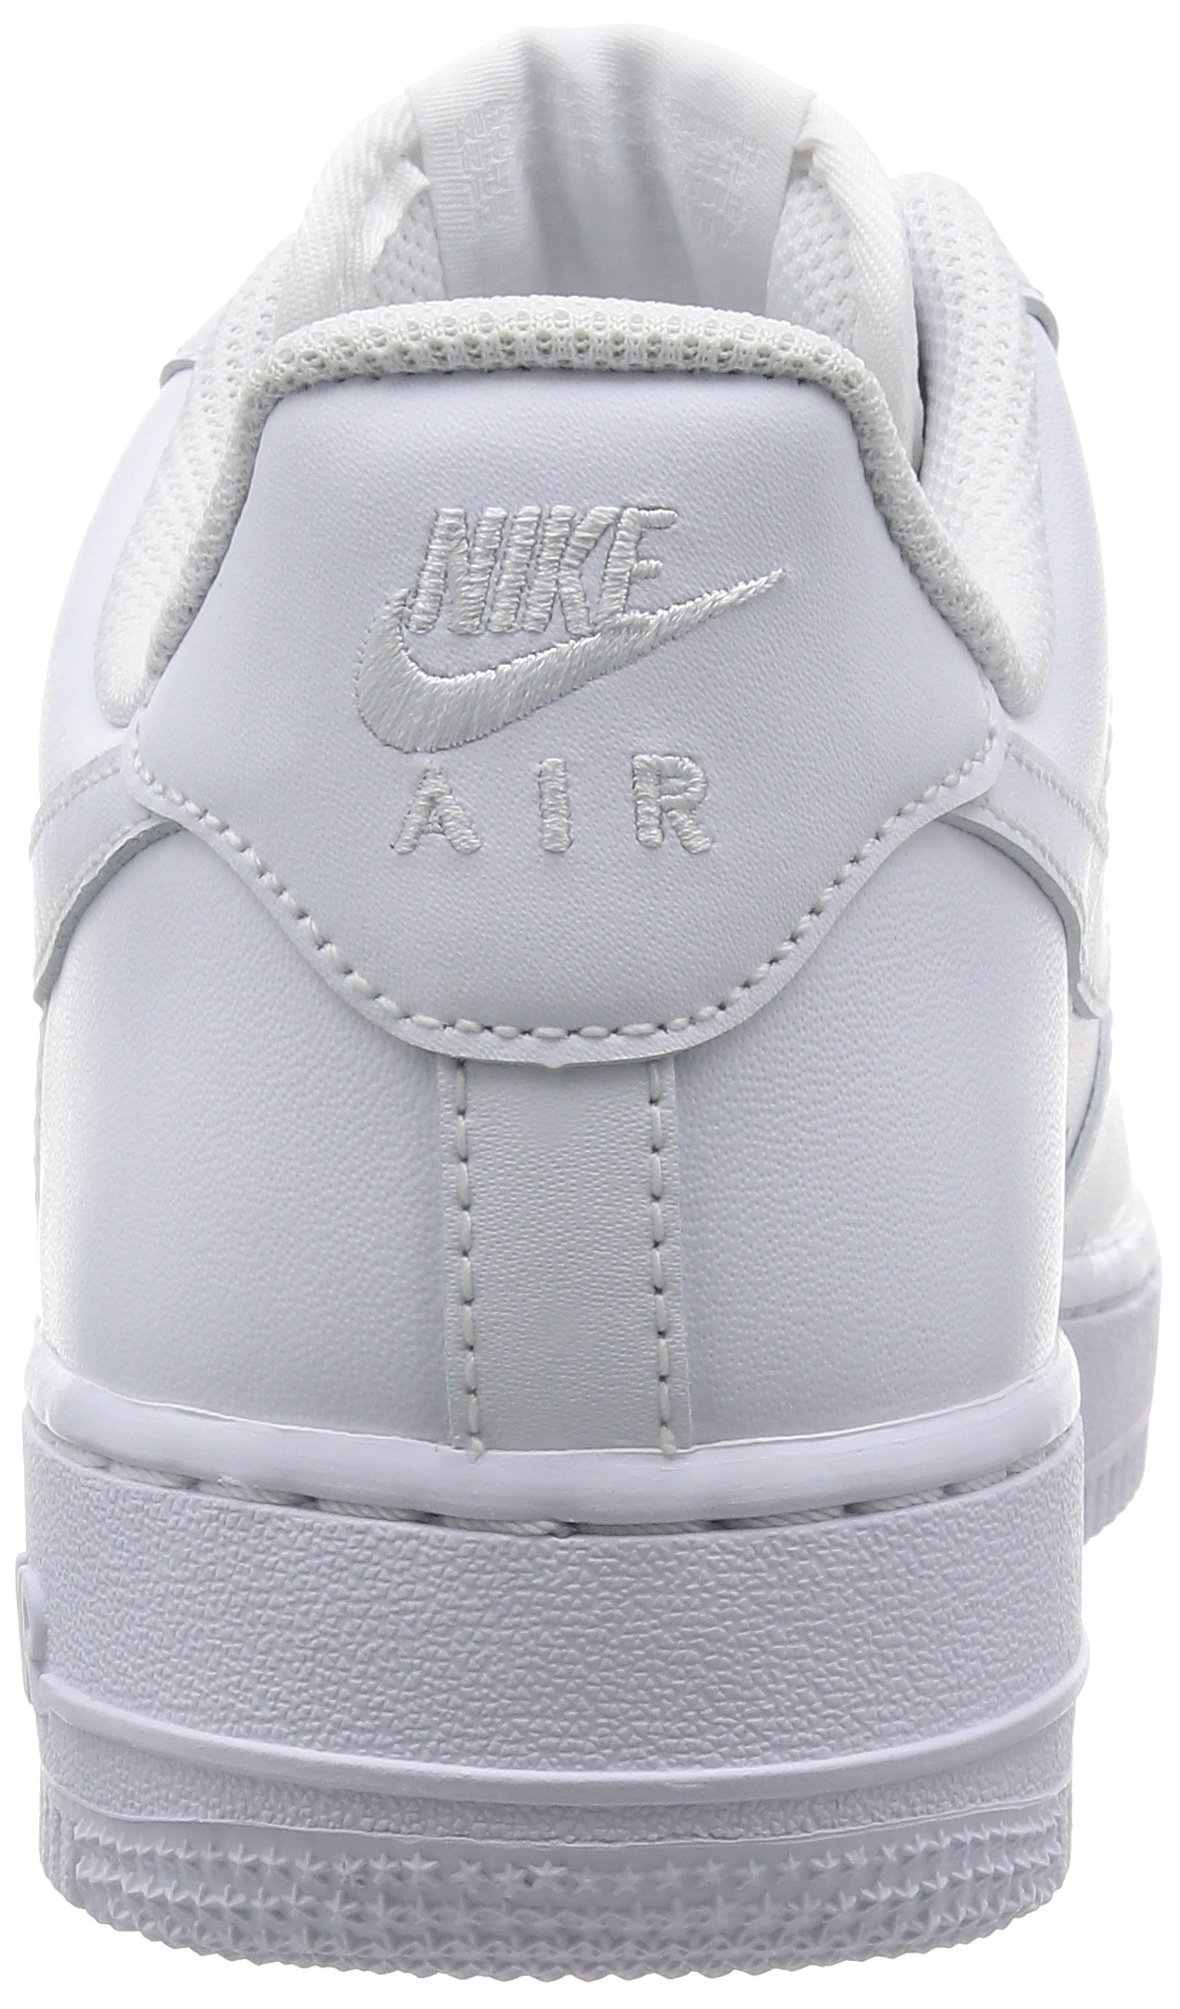 Nike Basketball Shoe